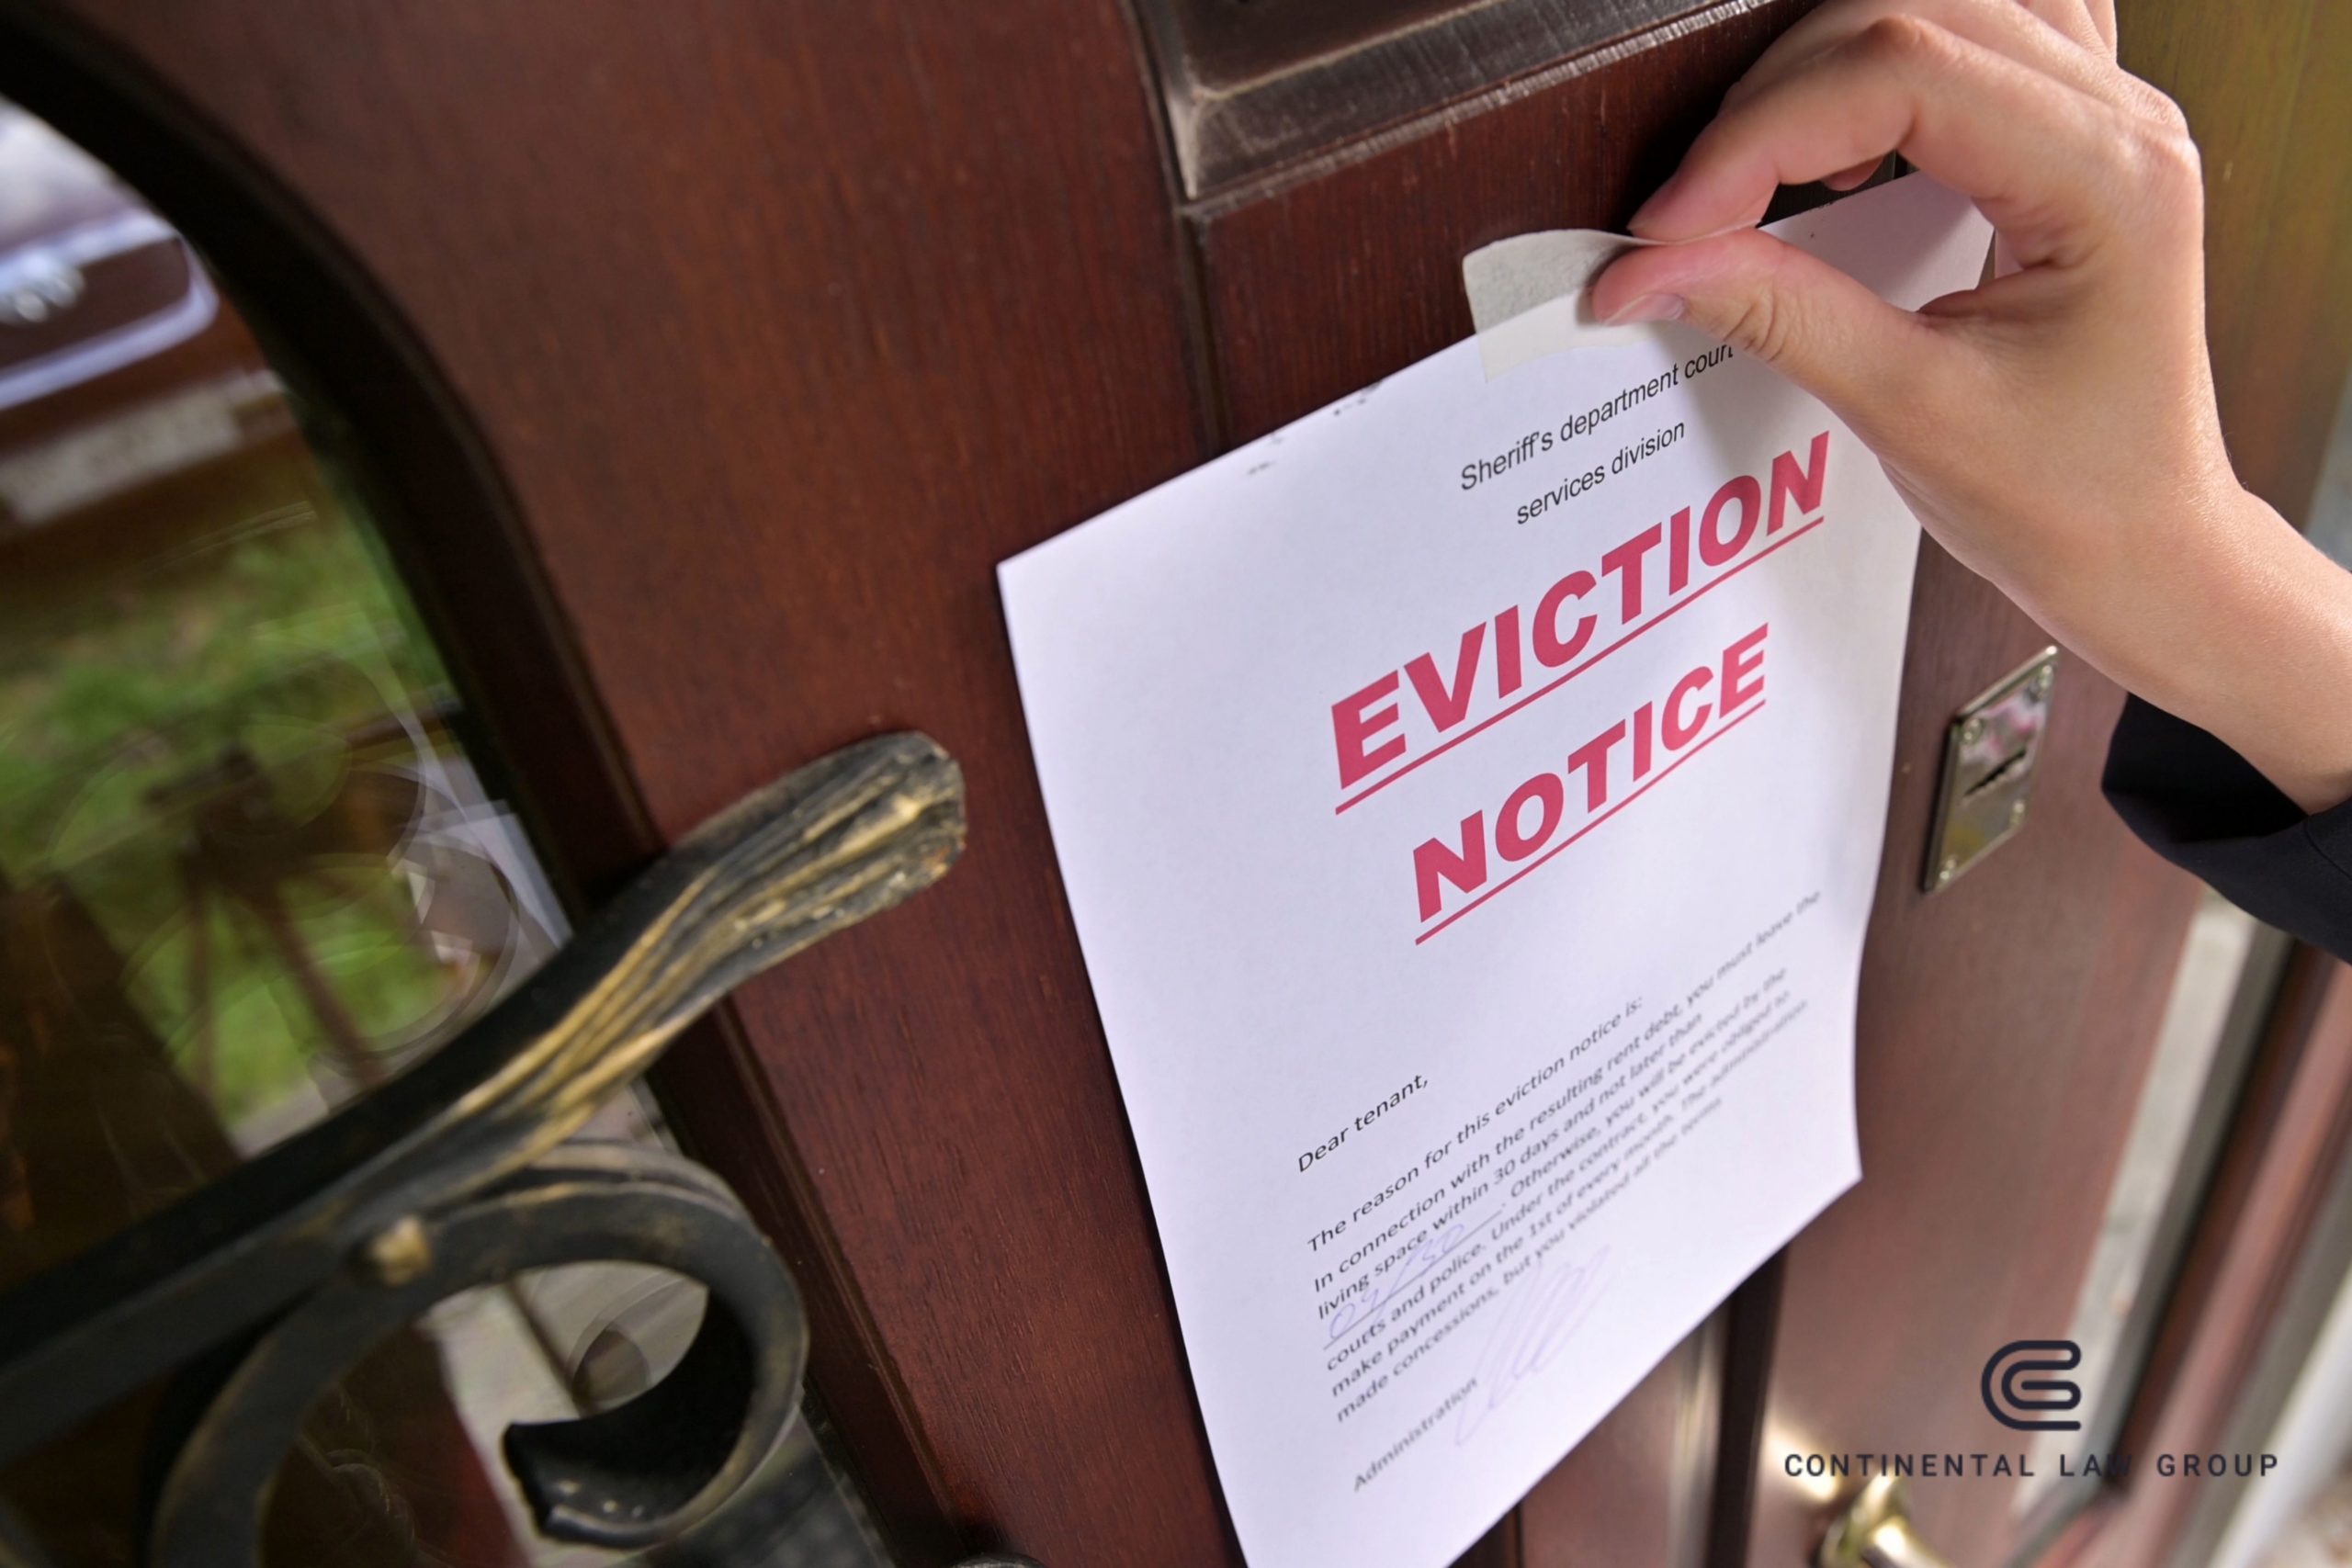 Boston Eviction Moratorium